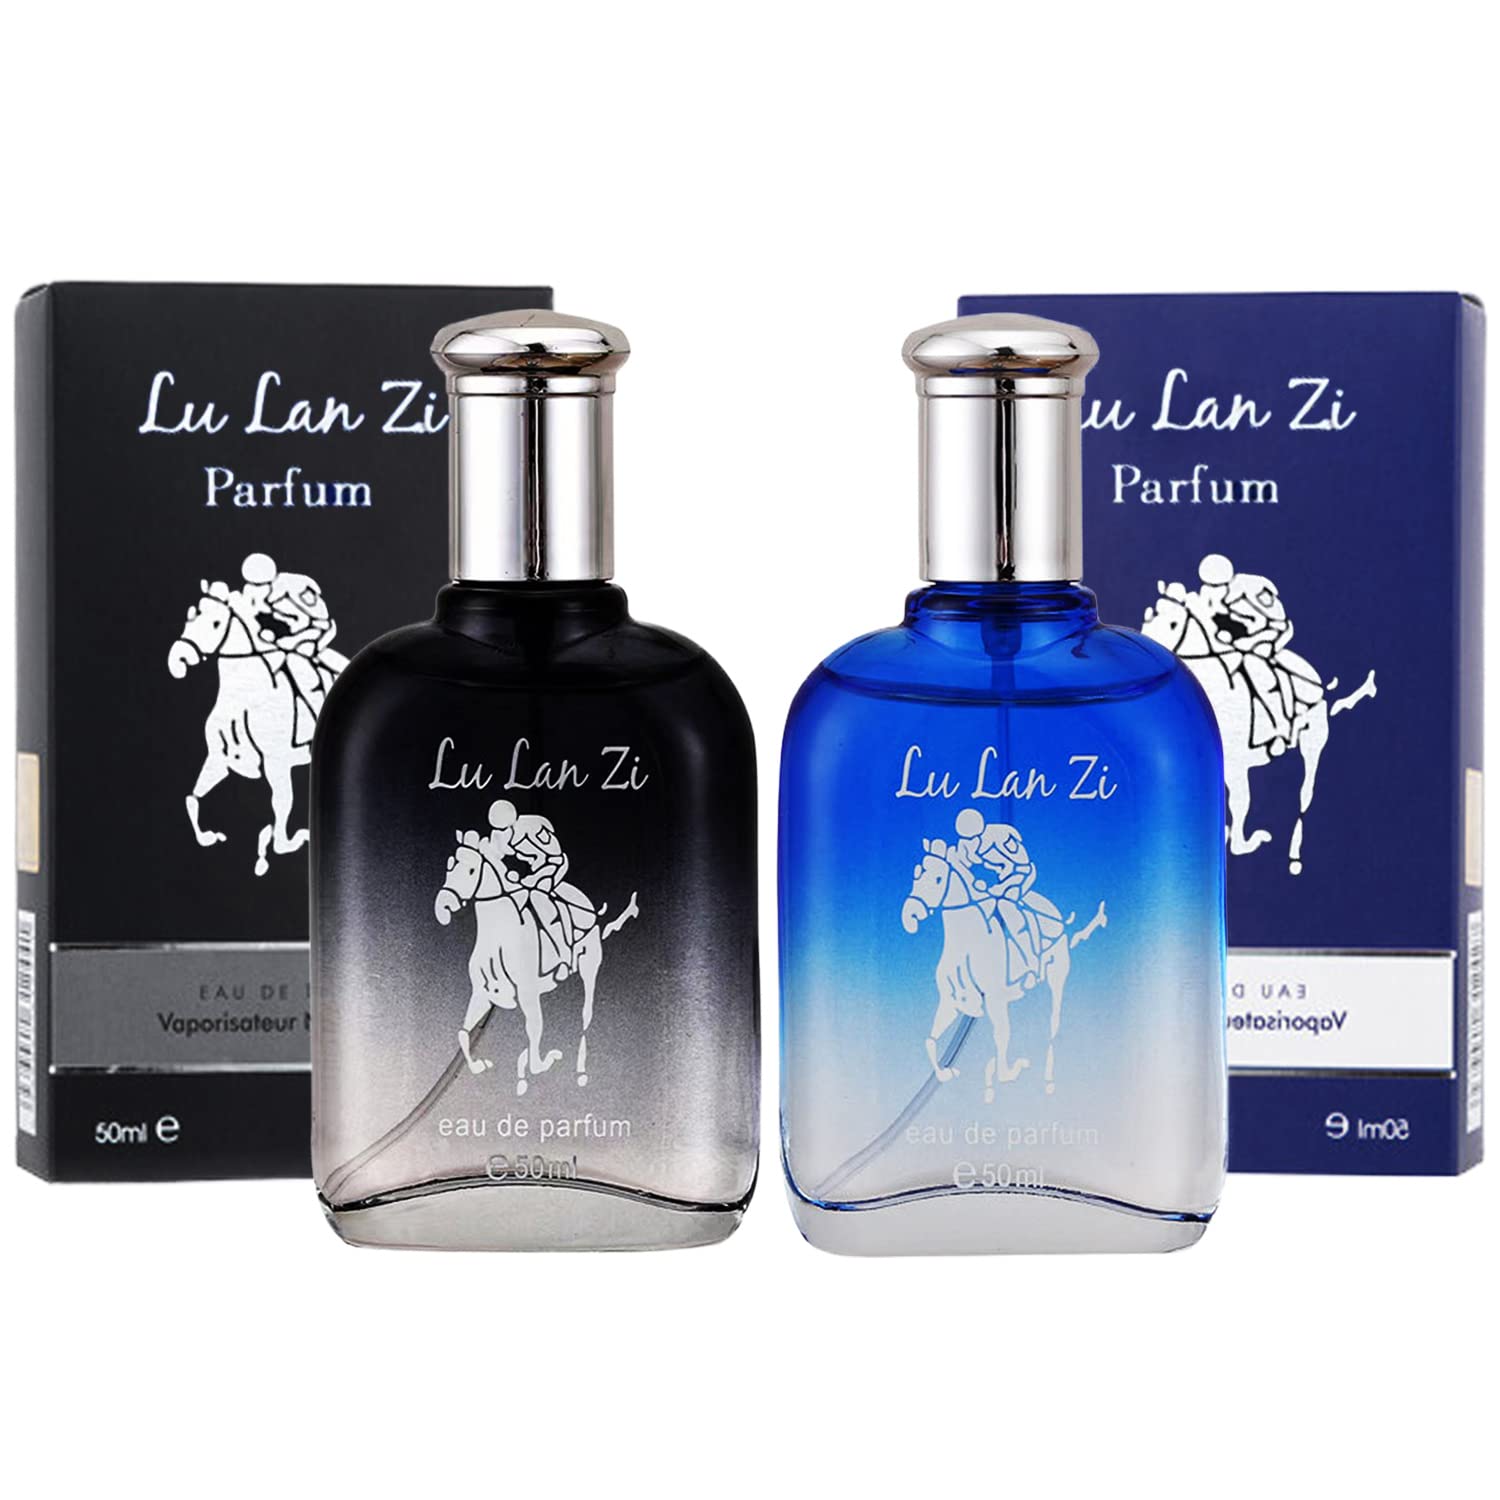 HAGUAN Pheromone Cologne for Men, Golden Lure Pheromone Perfume